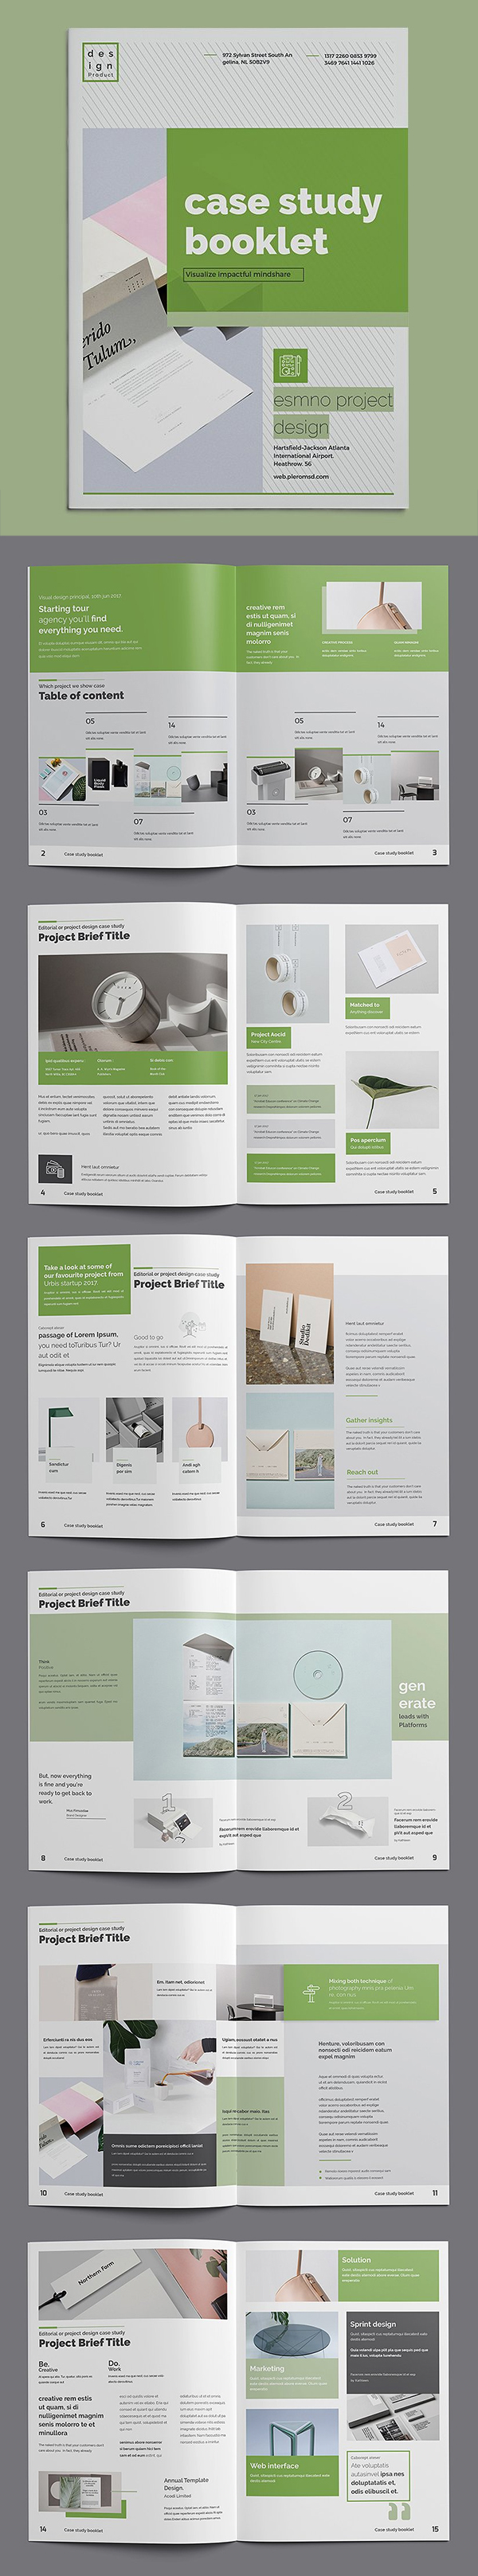 100 Professional Corporate Brochure Templates - 66